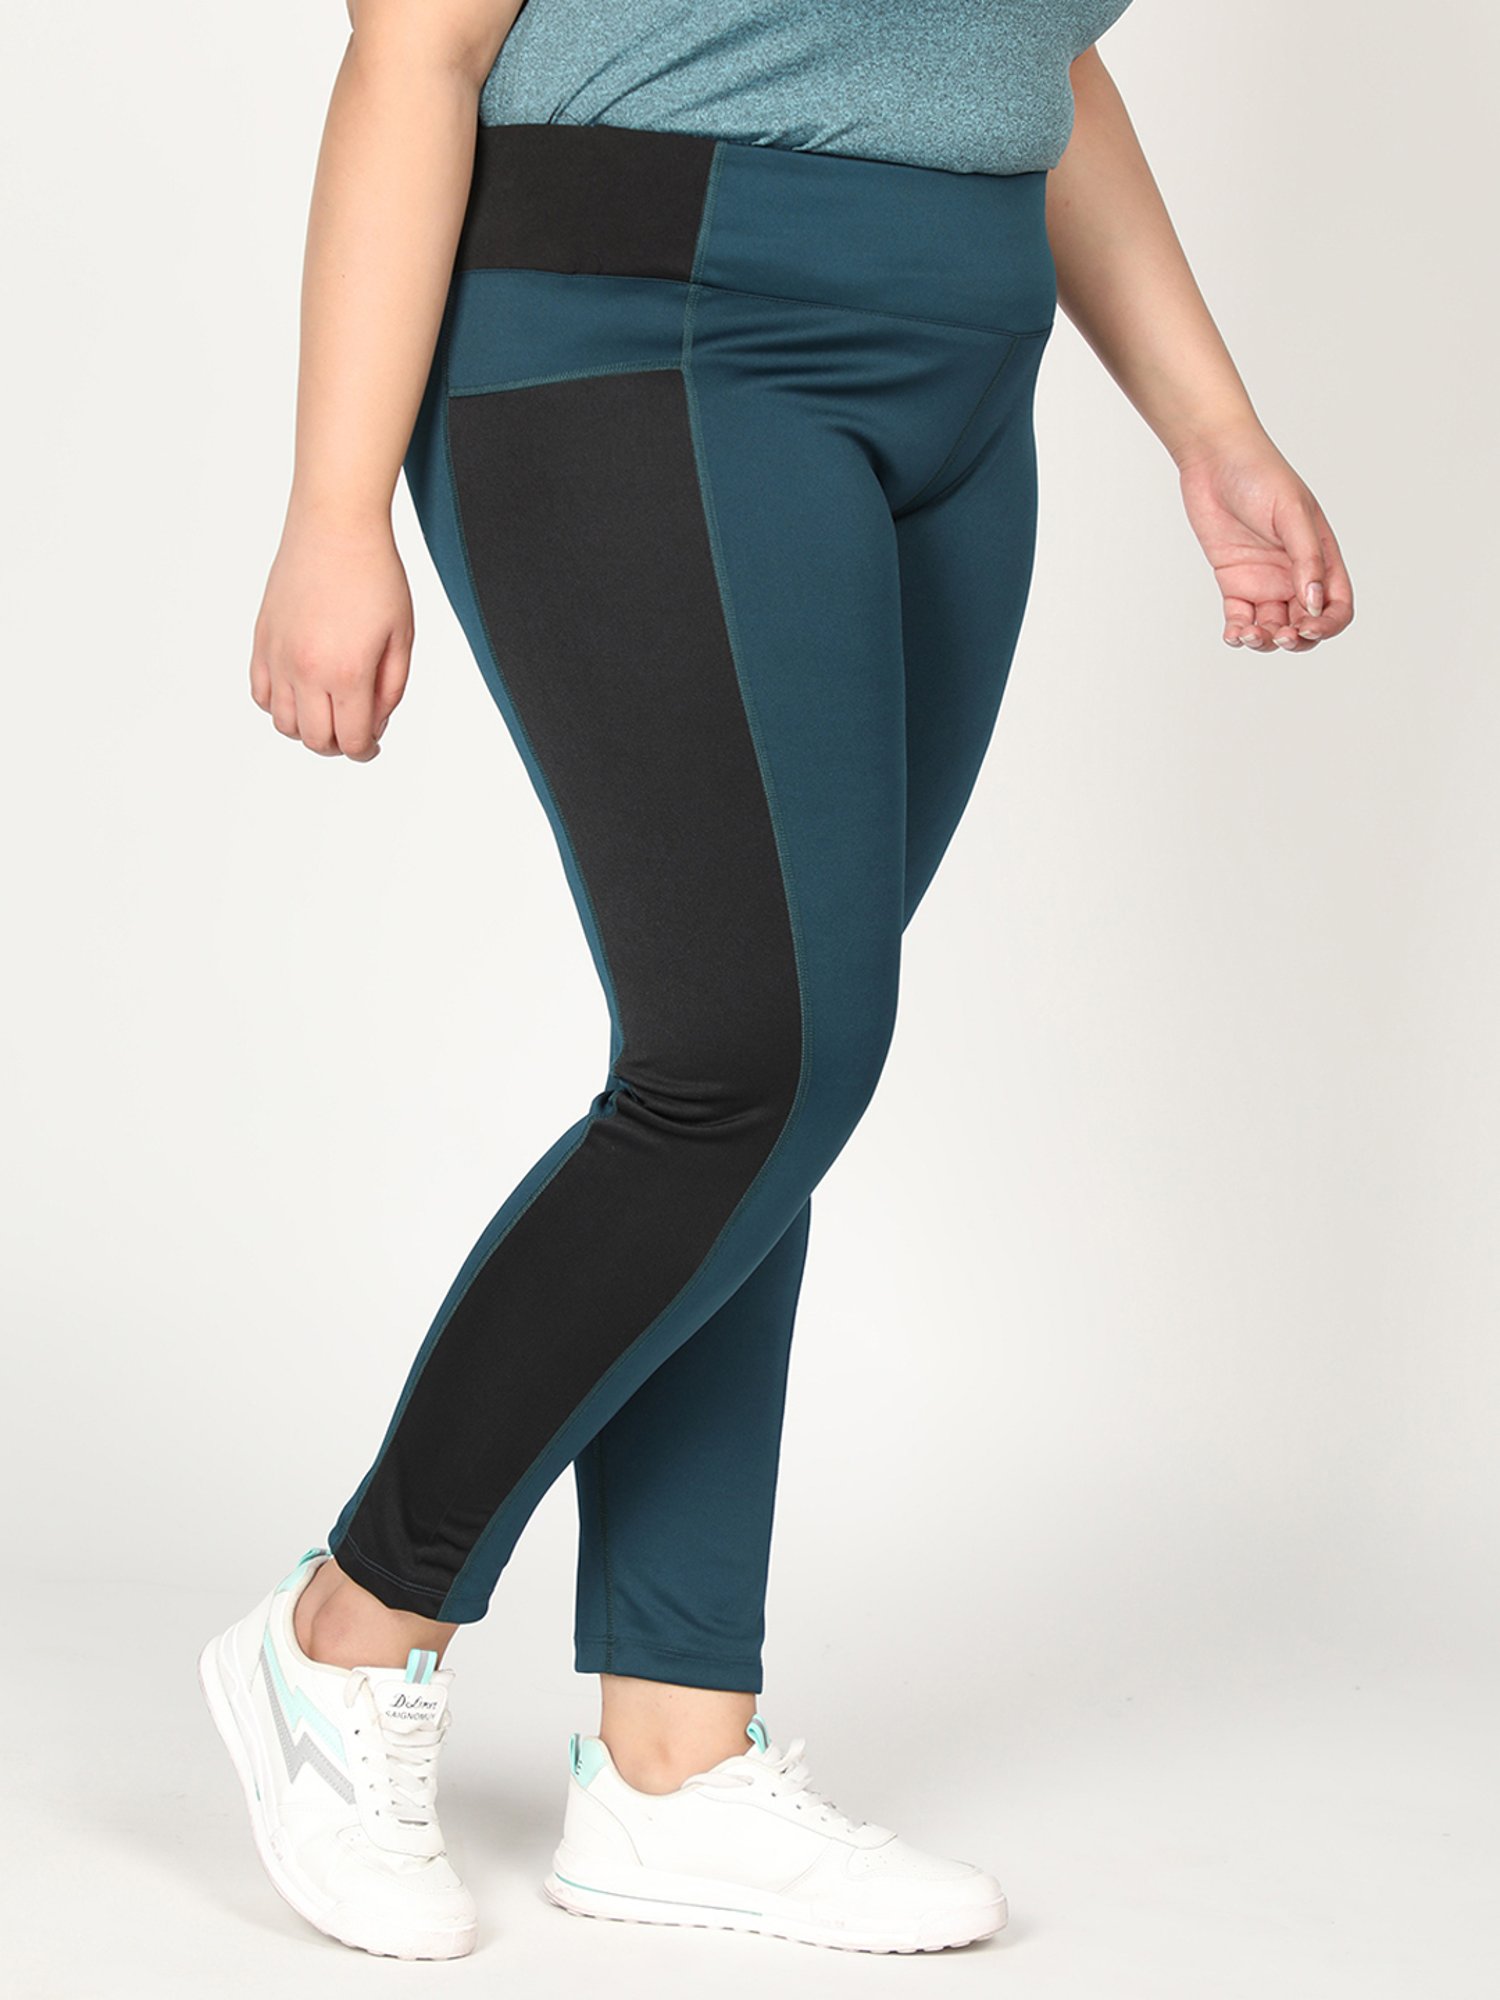 Buy Chkokko Teal Blue Color-Block Workout Leggings for Women